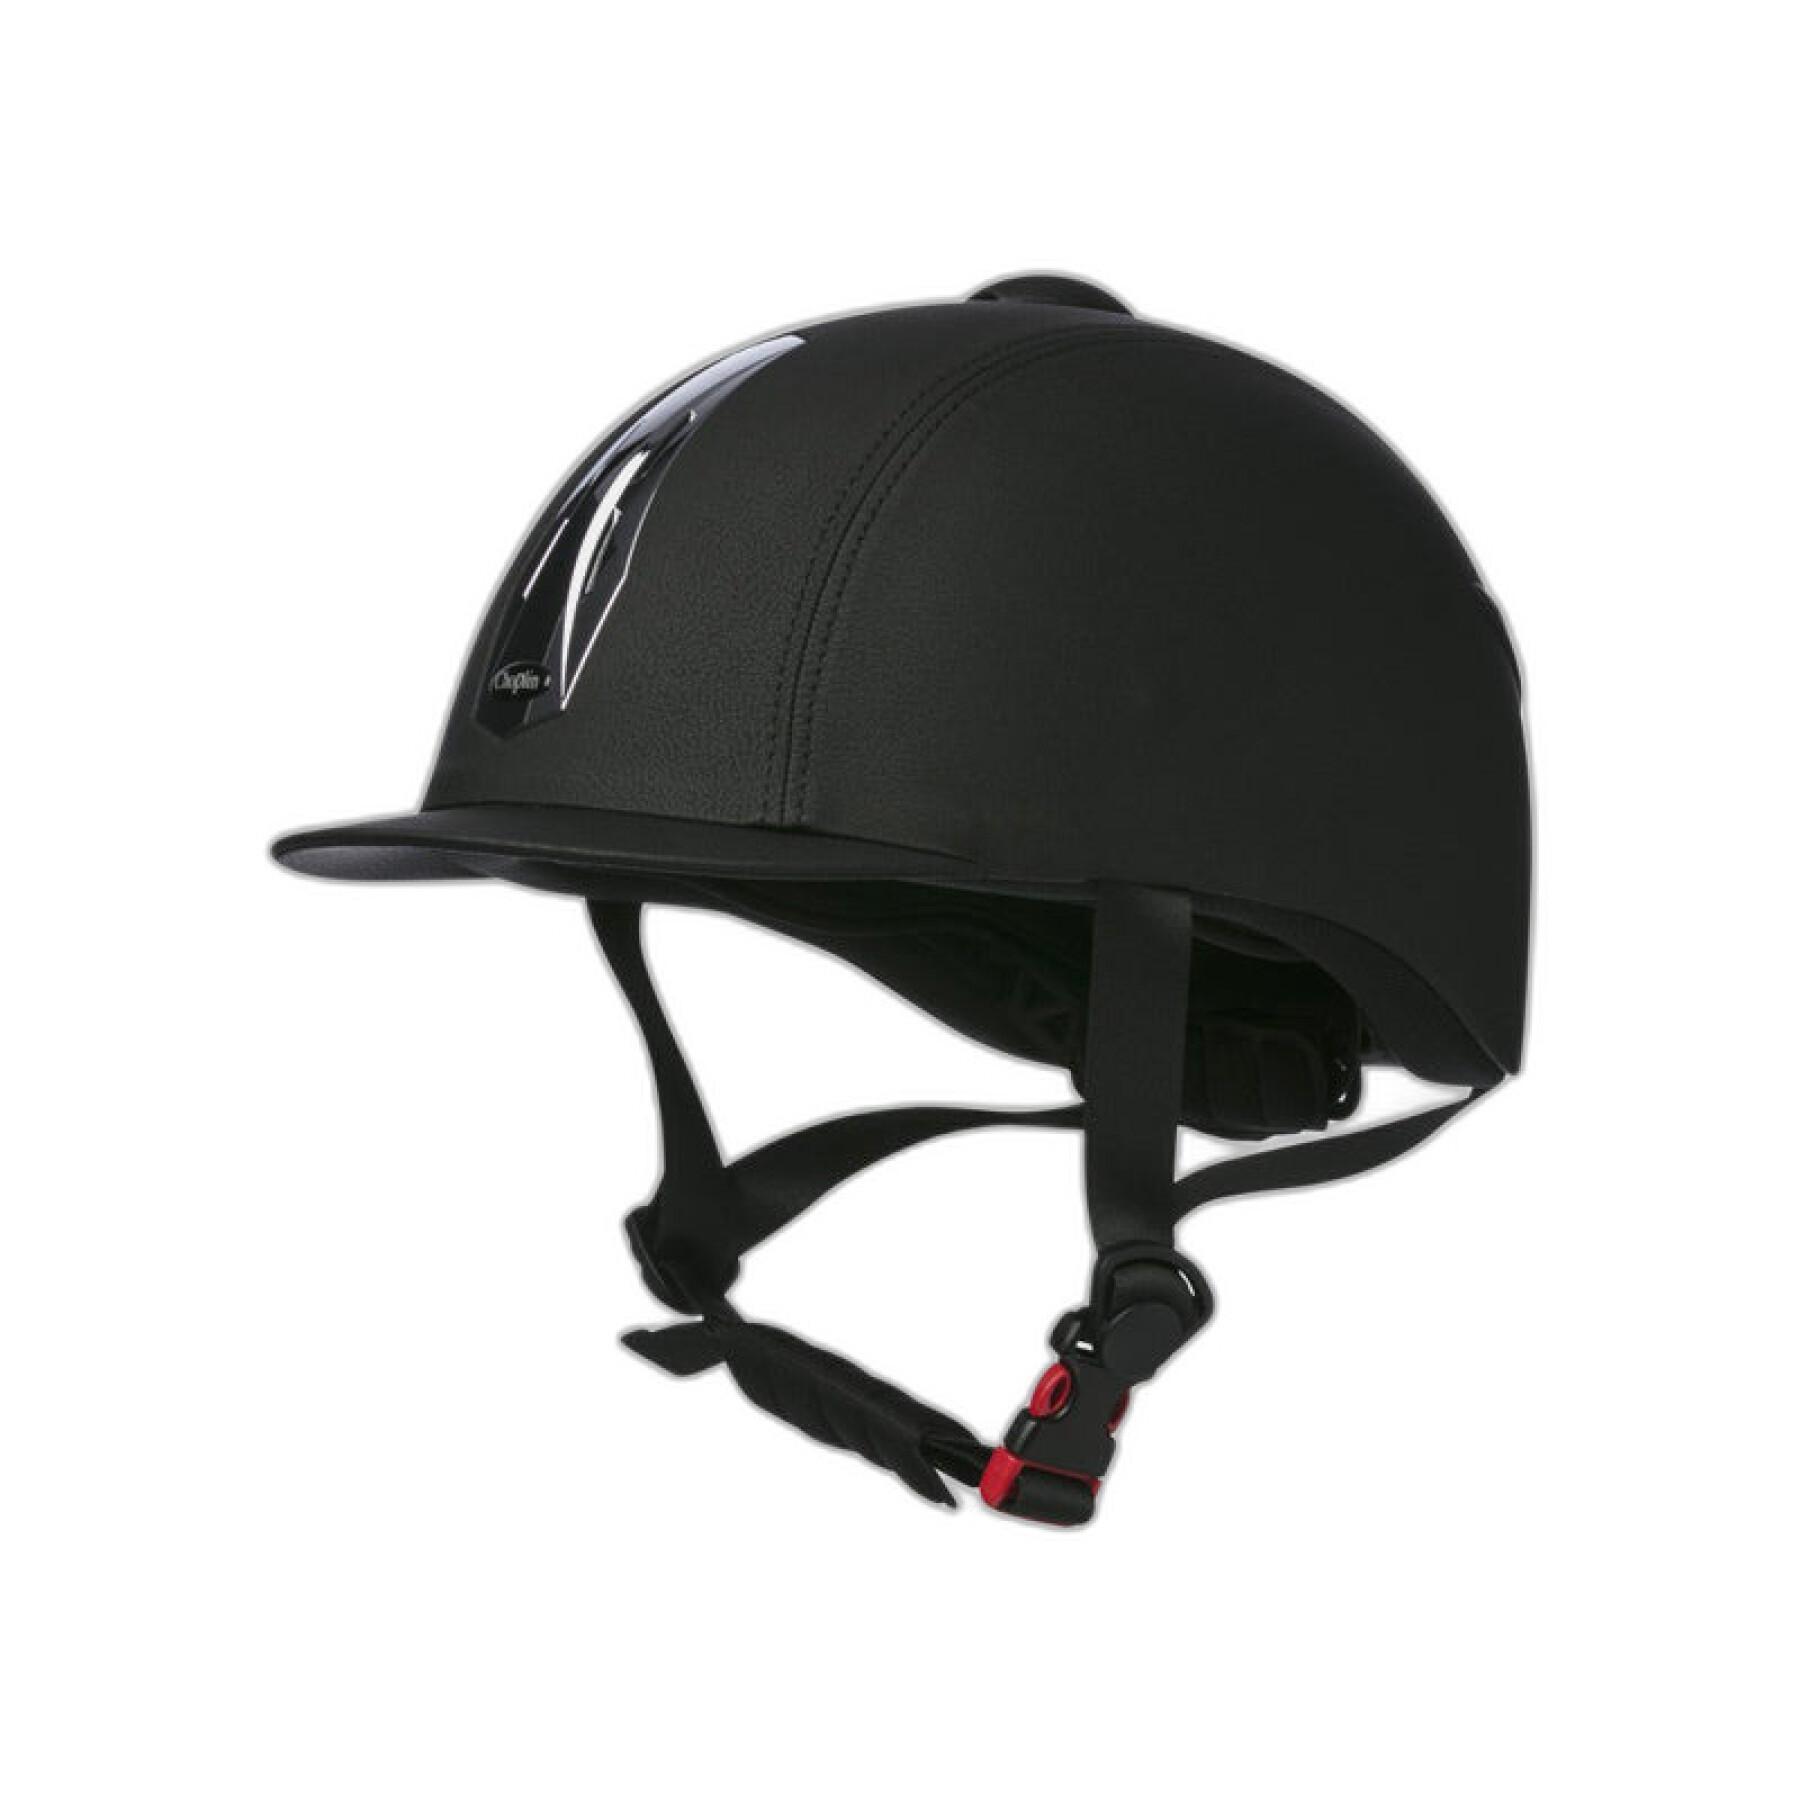 Adjustable riding helmet Choplin Premium grainé